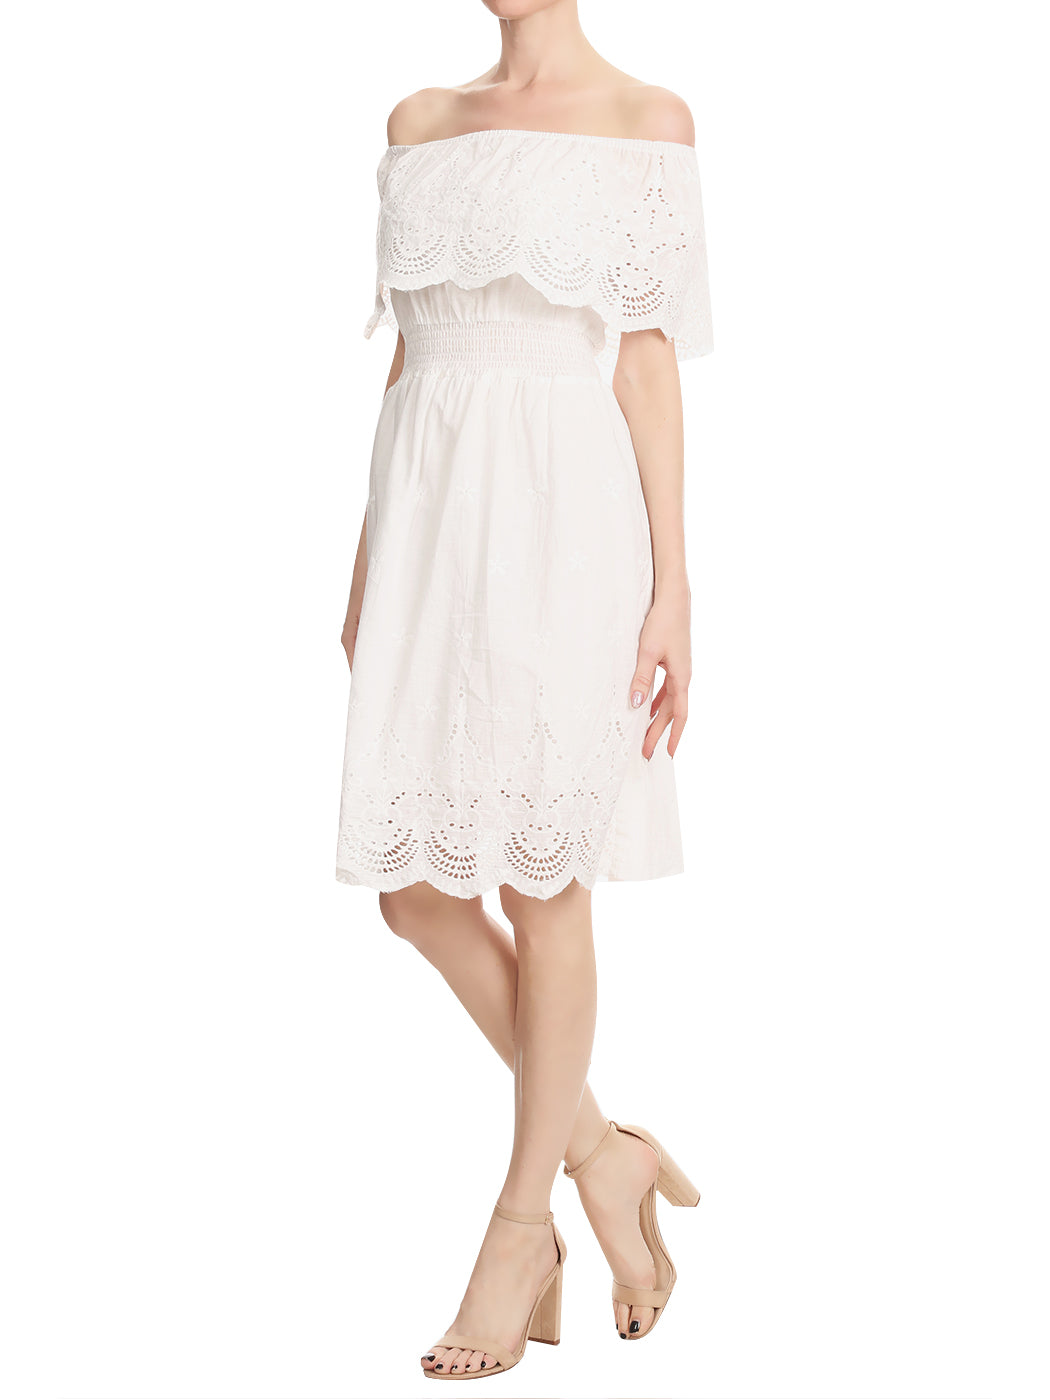 Womens Casual Cotton Off Shoulder Ruffle Short Summer Sun Dress, White, Small